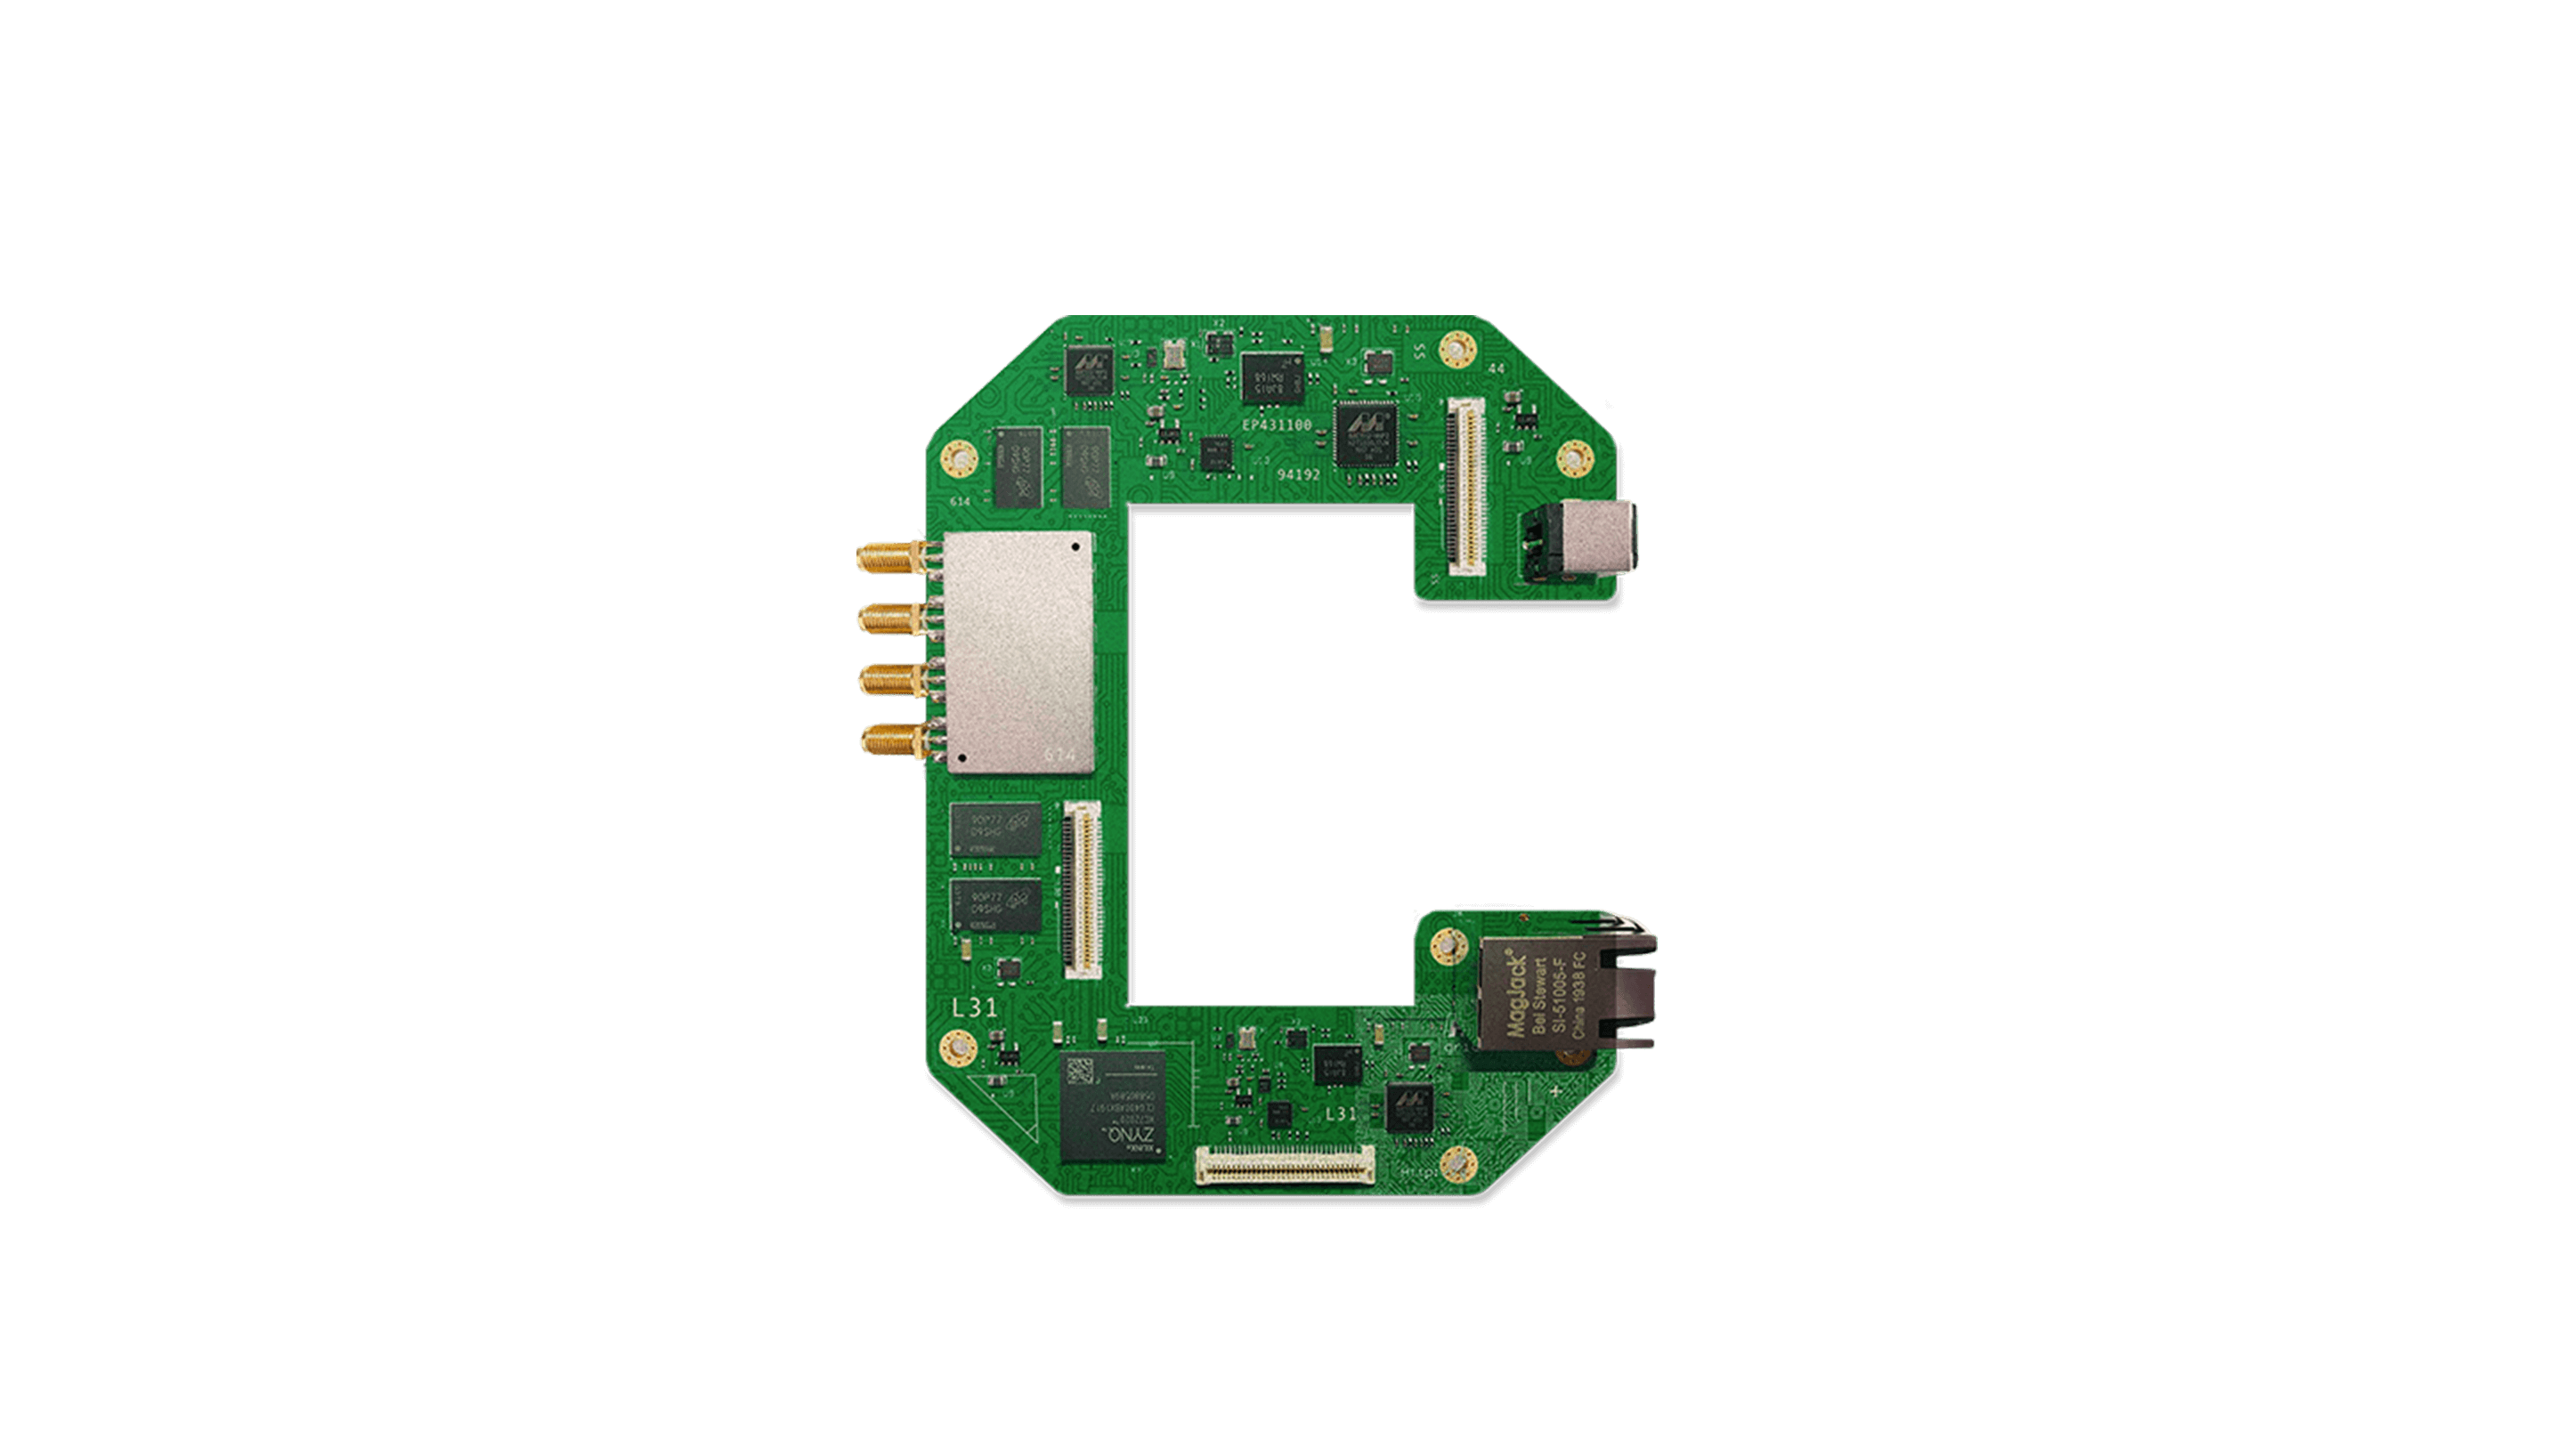 Circuit board shaped like the Cornell C